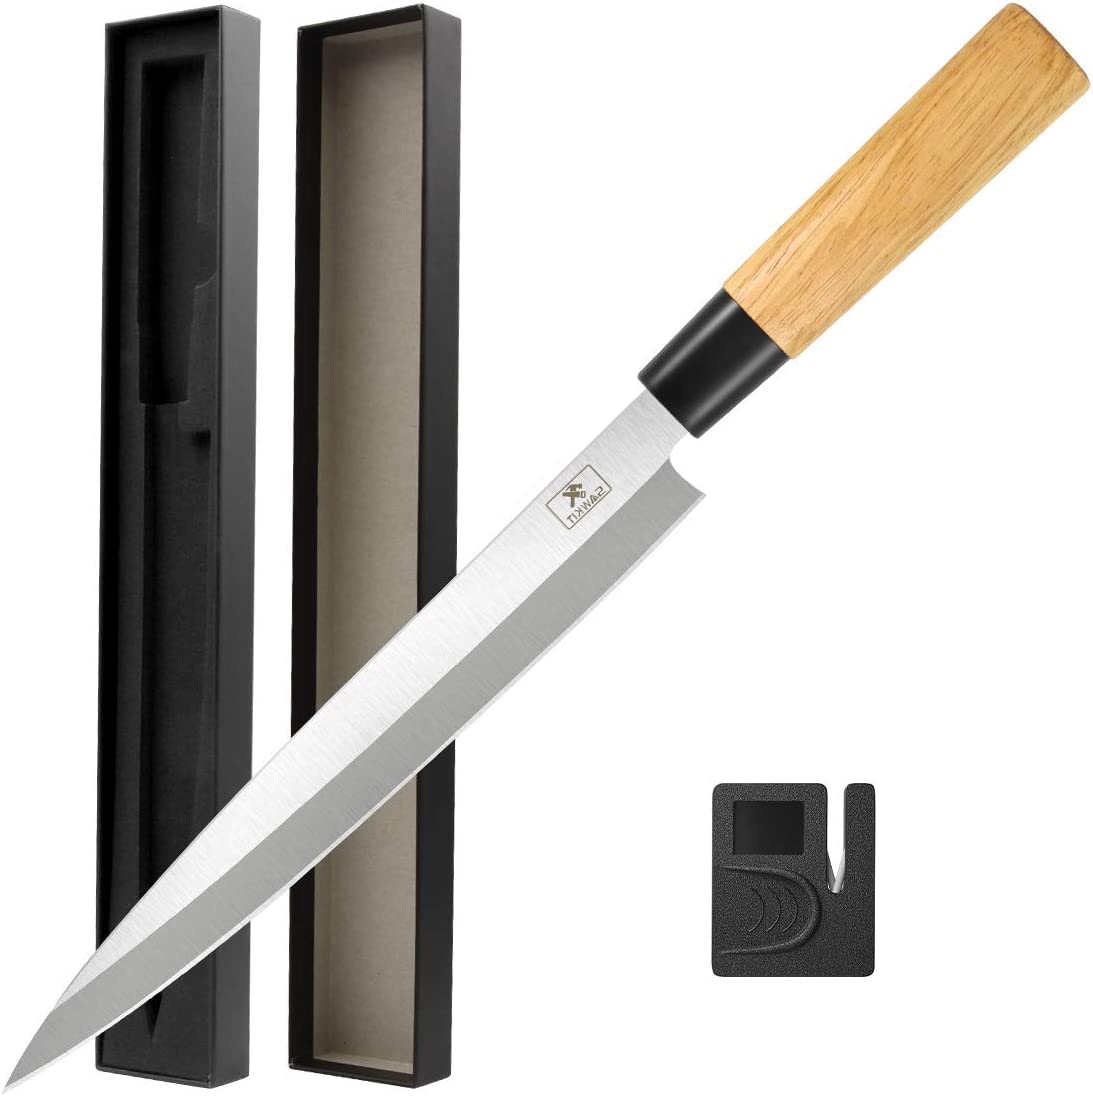 SAWKIT Sashimi Sushi Knife 7-9 Inch/Fish Perfect Boning Knives/Bread Chef’s/For Cutting Sushi/Sashimi Fish Filleting Slicing/Very Sharp Stainless…